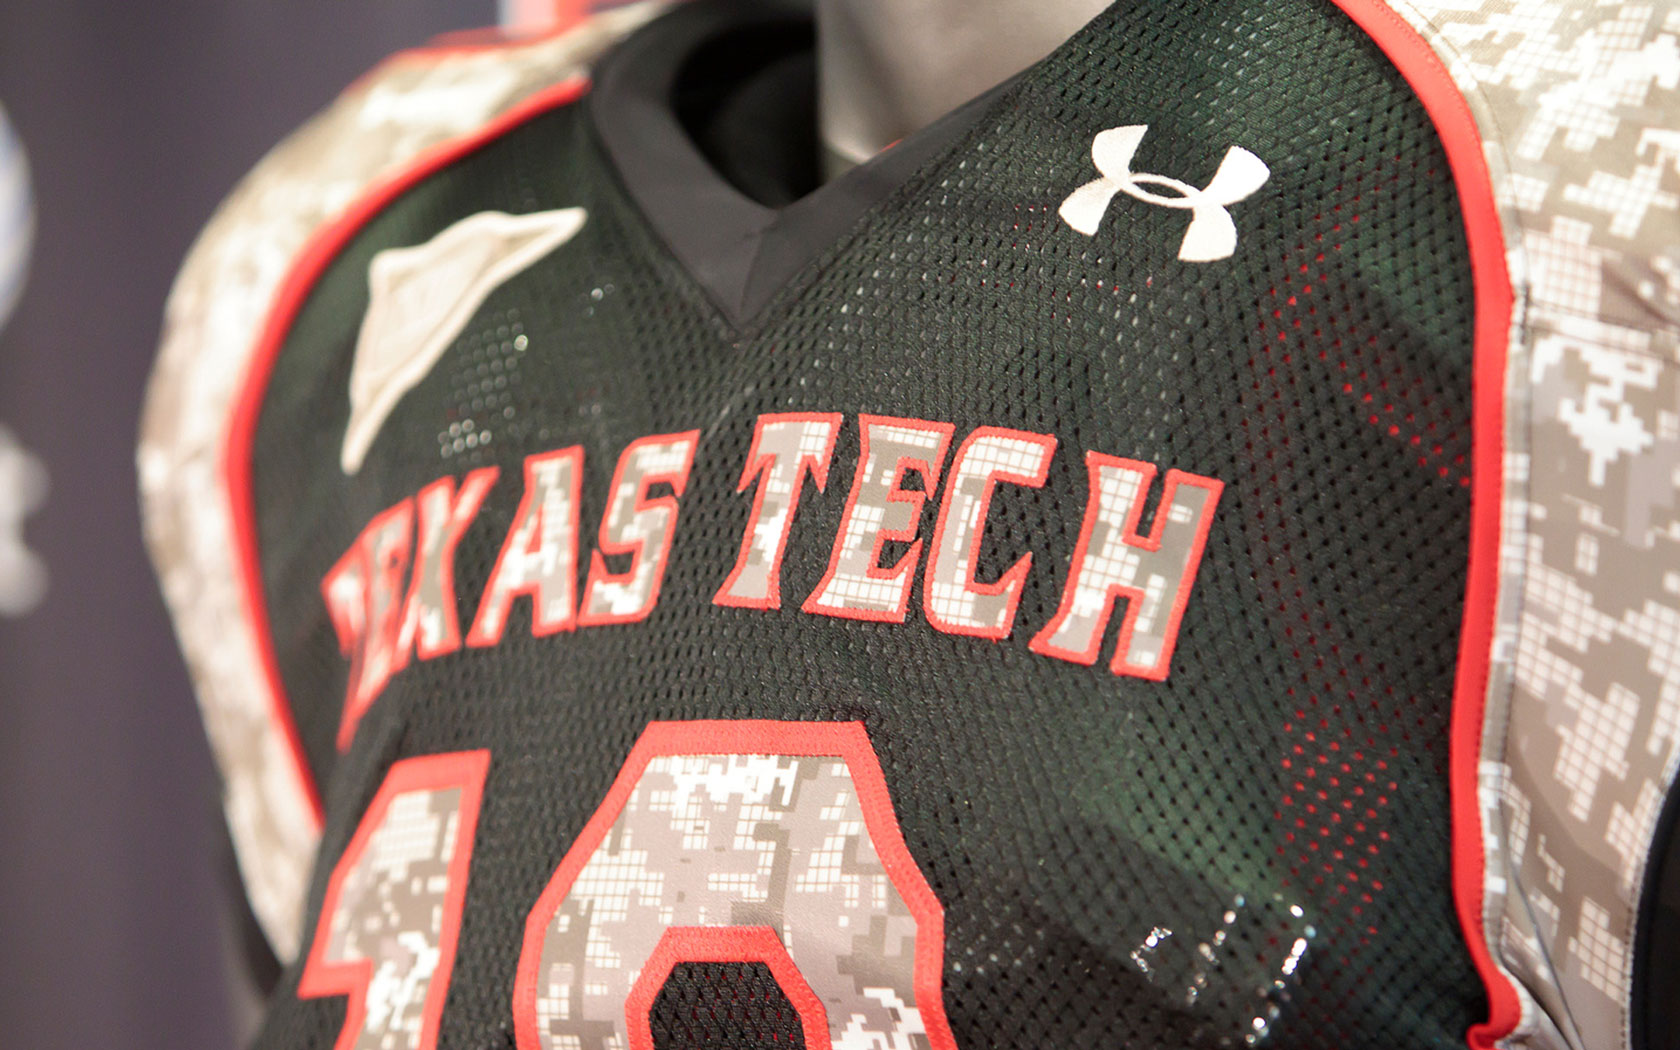 Texastech Texas Tech University Official Athletic Site